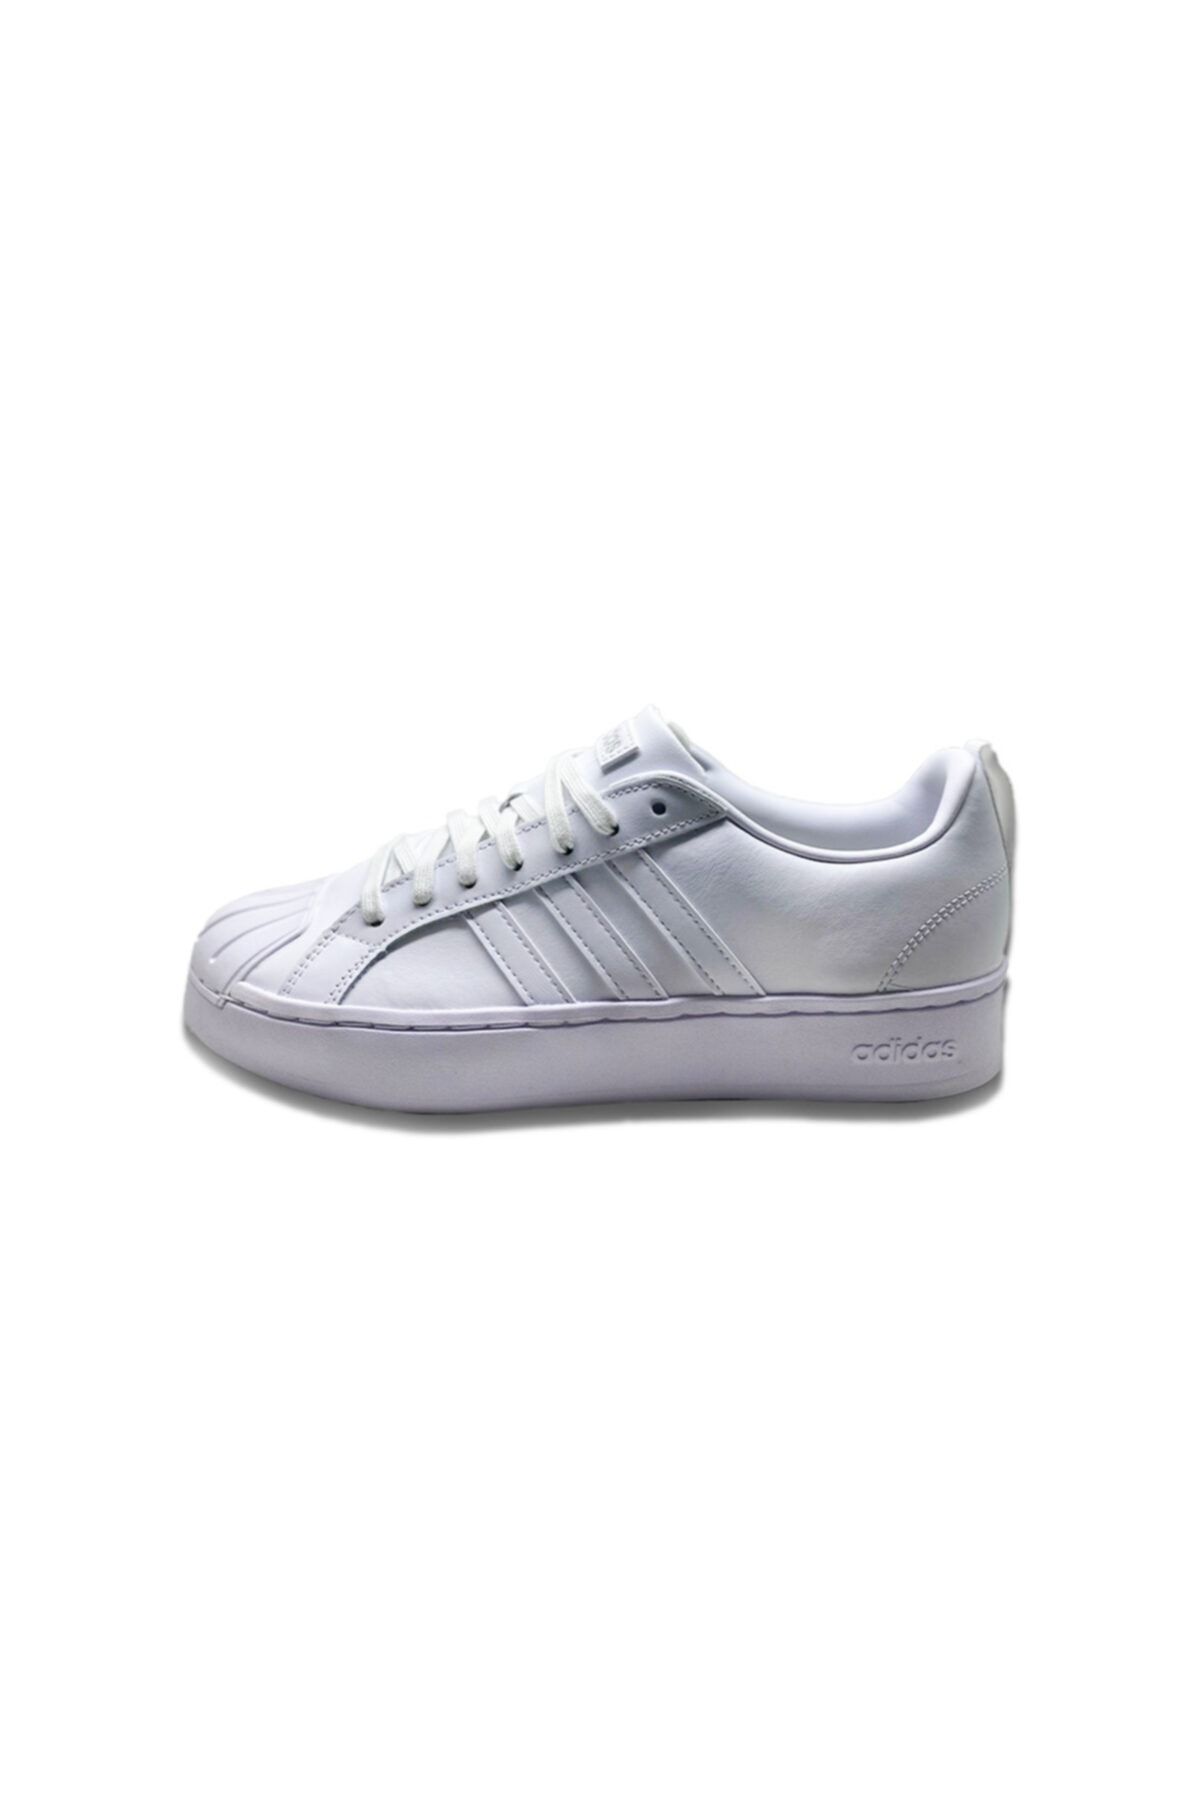 adidas Streetcheck Beyaz Spor Ayakkabı Gw5490